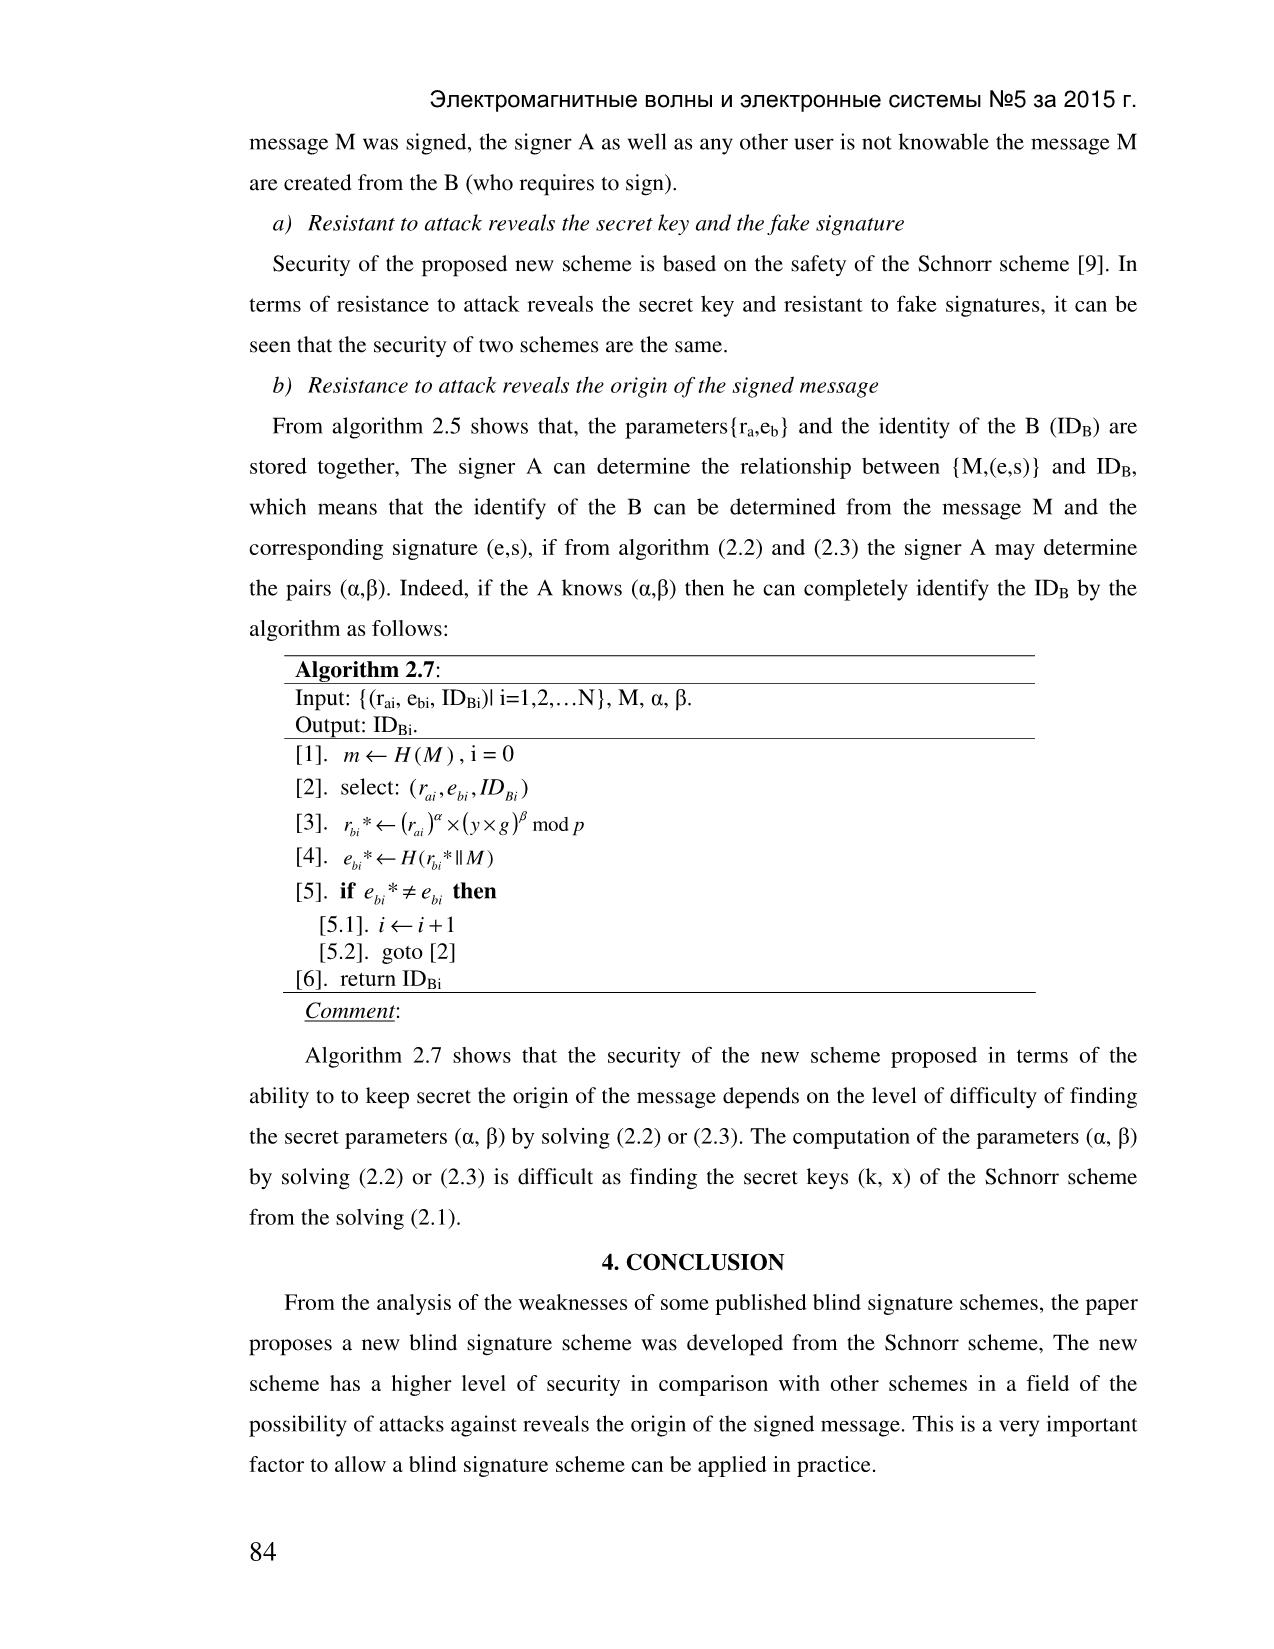 Blind signature scheme based on discrete logarithm problem trang 9